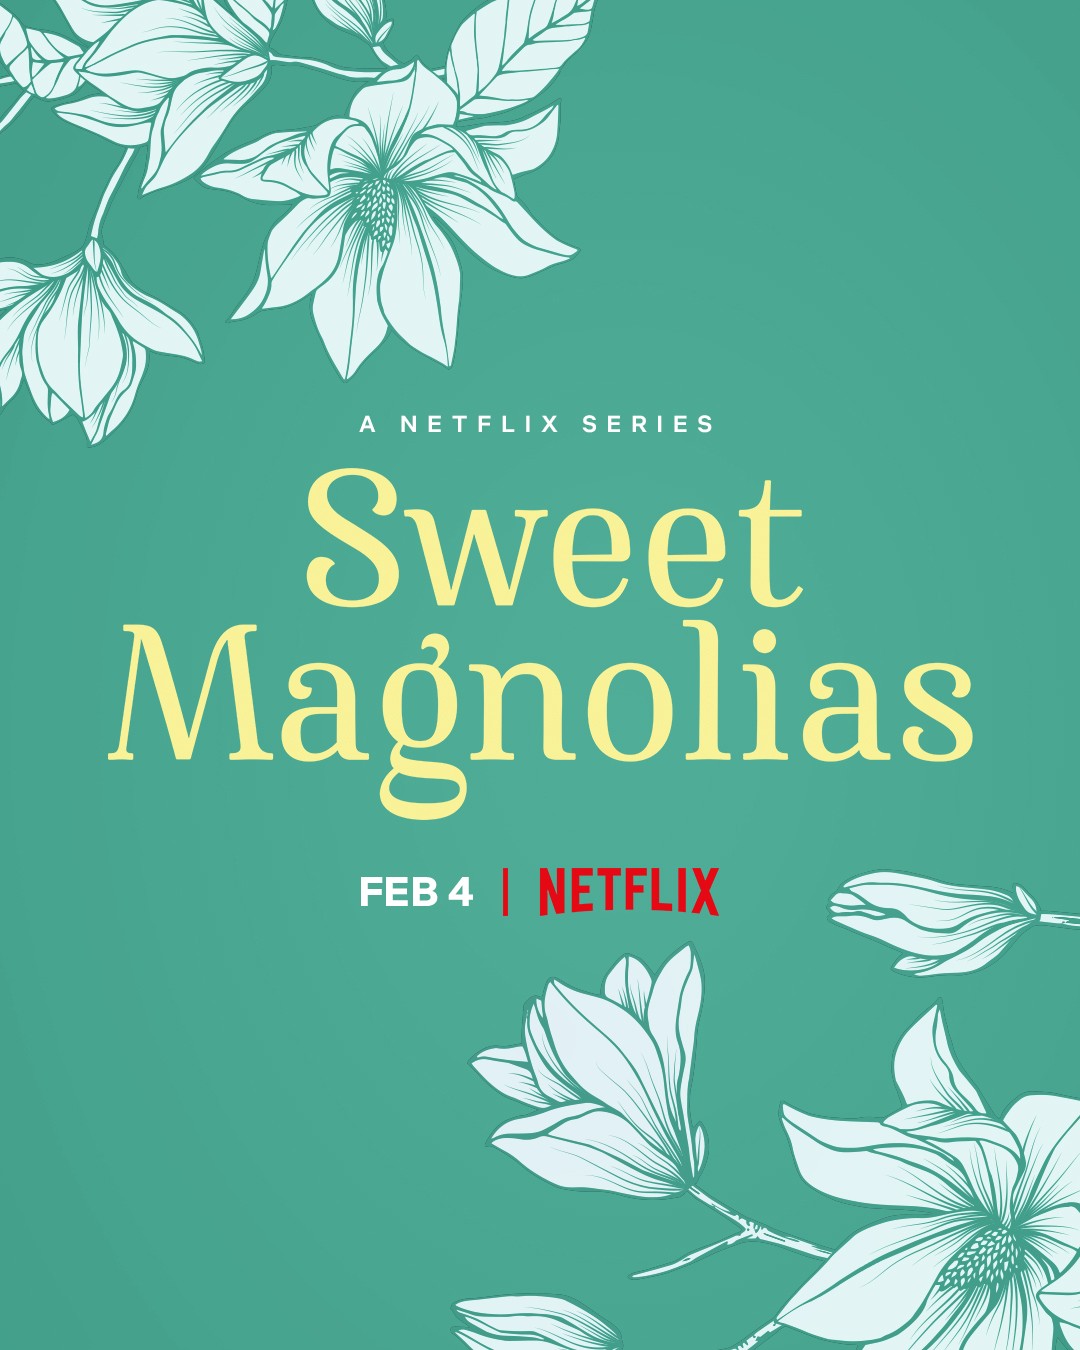 Sweet Magnolias Season 2 Review